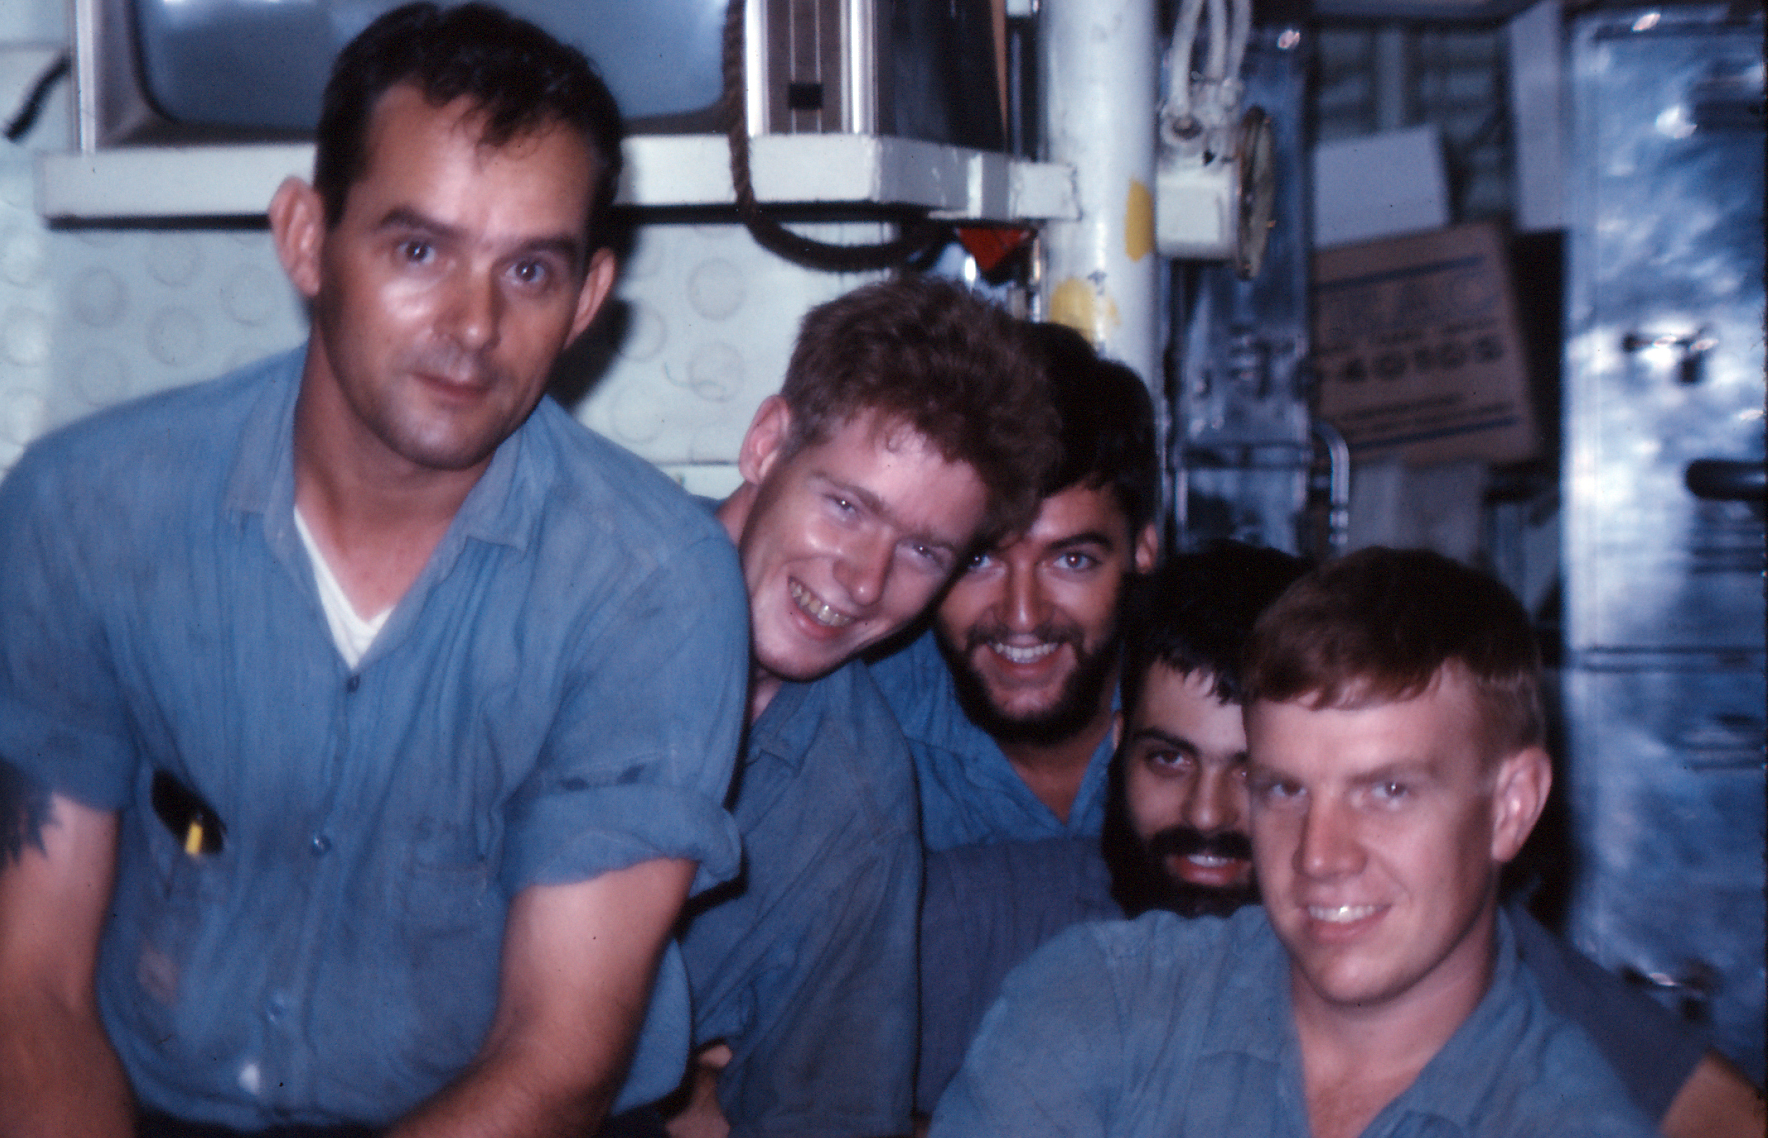 Joe Leatherman and 4 shipmates